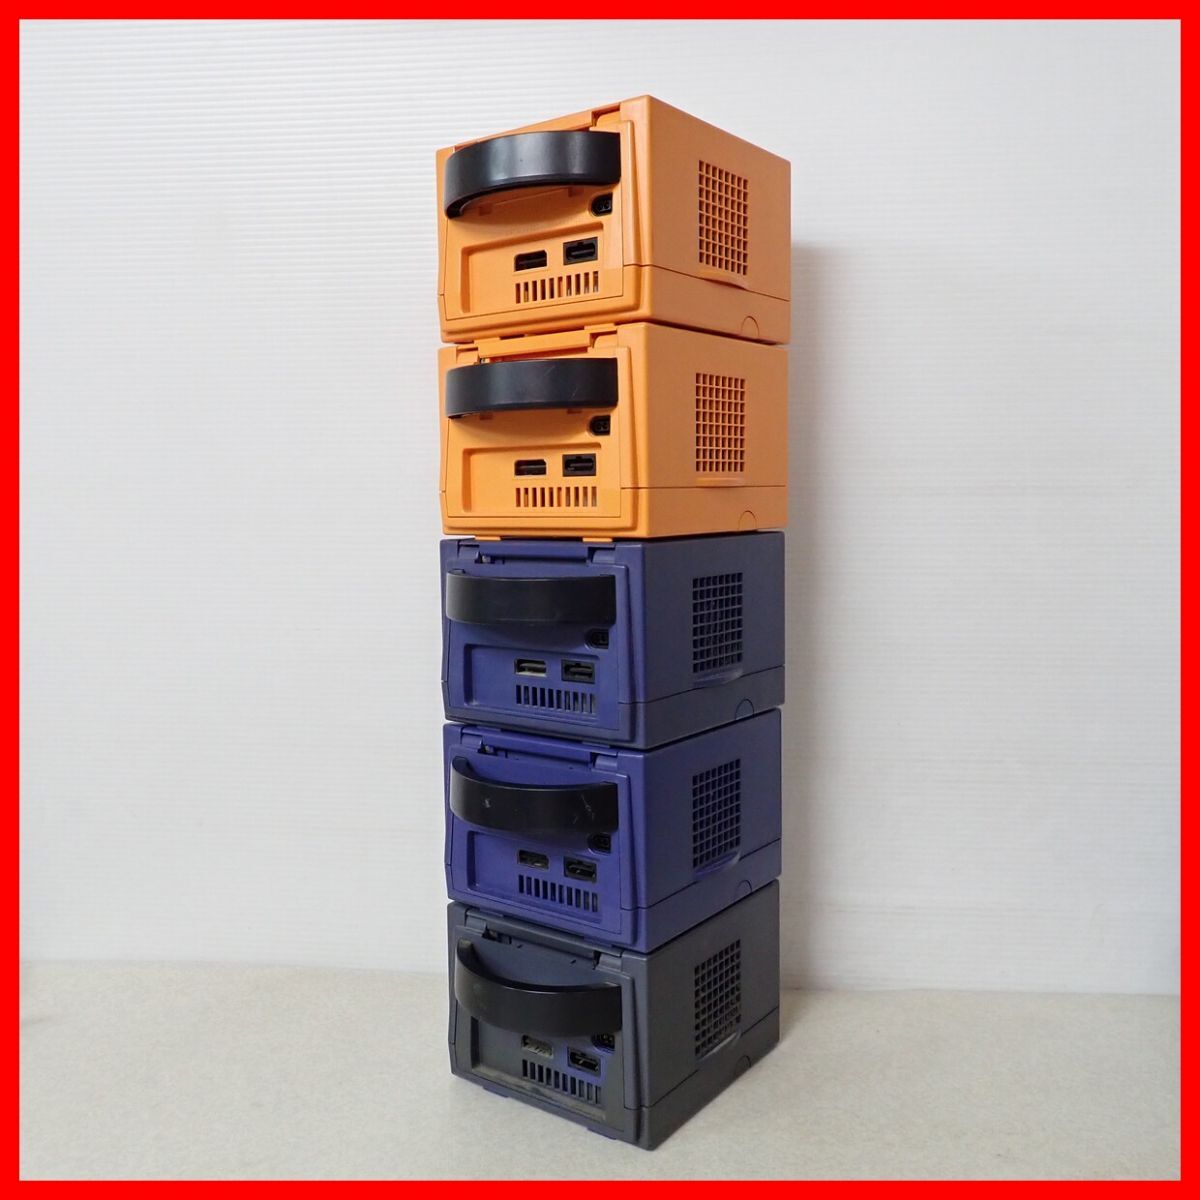 GC Game Cube body orange / violet / black 10 pcs together large amount set Nintendo nintendo Junk [40